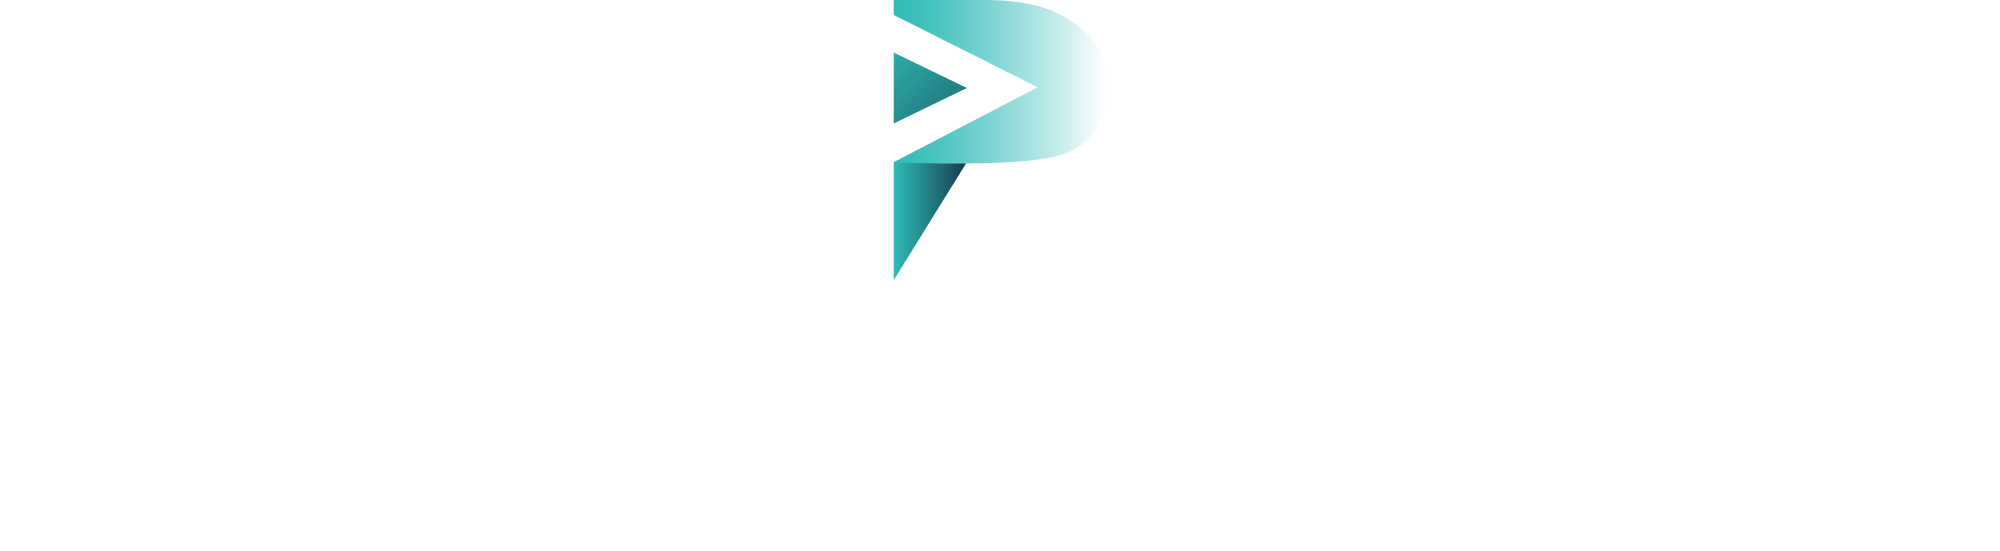 Padula media logo image